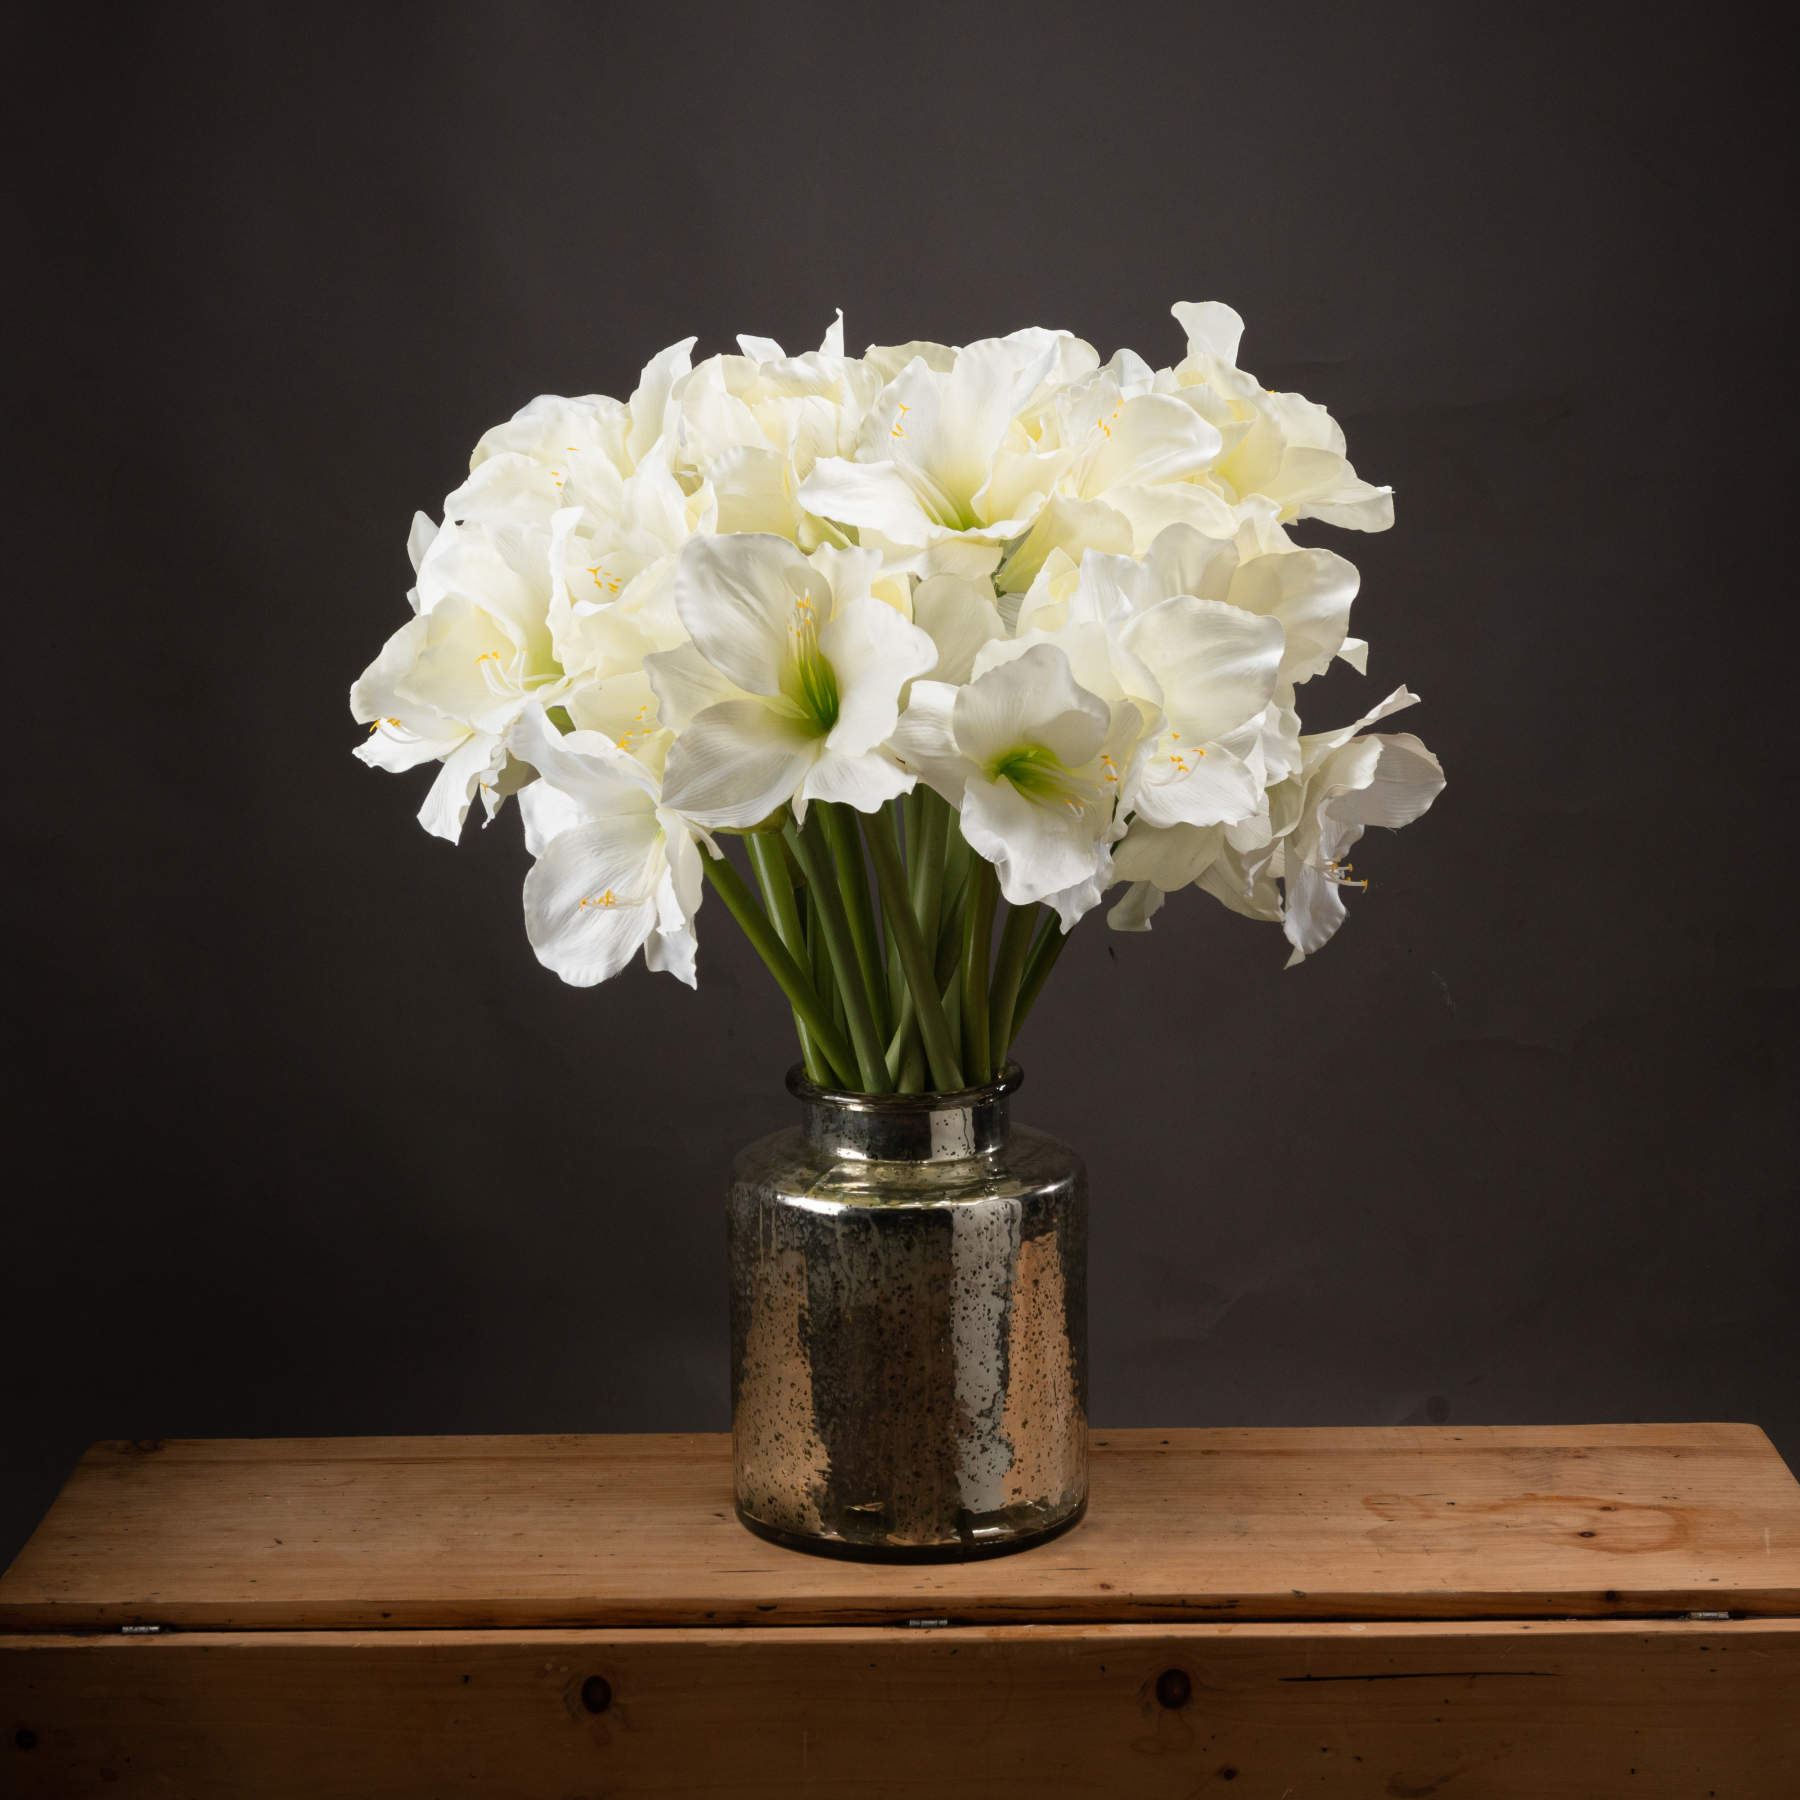 View Classic White Amaryllis Flower information